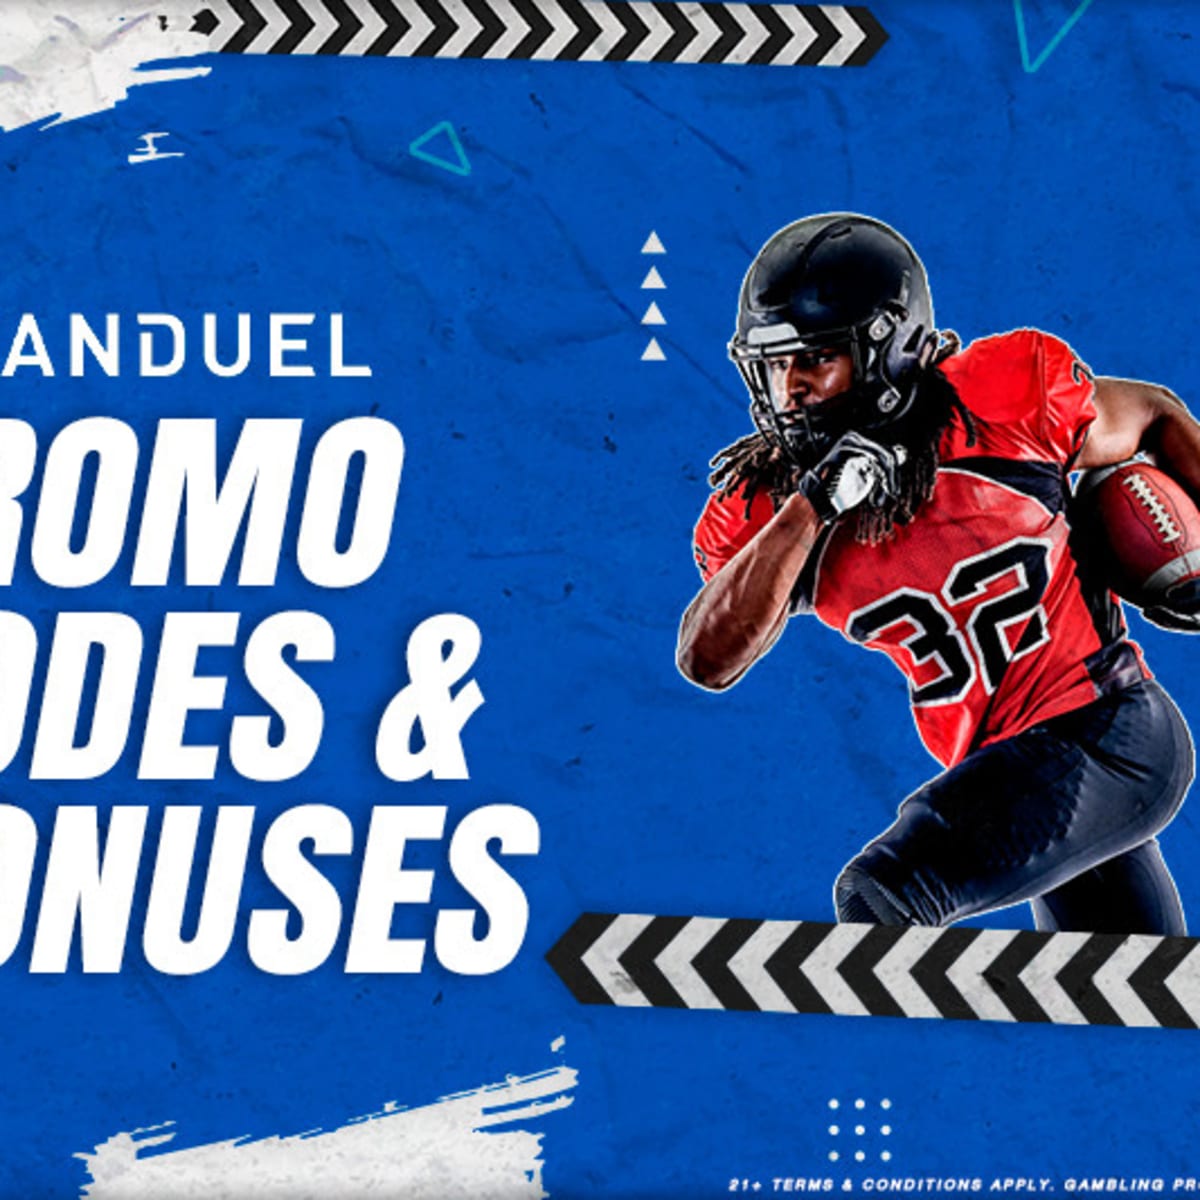 FanDuel is offering $100 discount on NFL Sunday Ticket